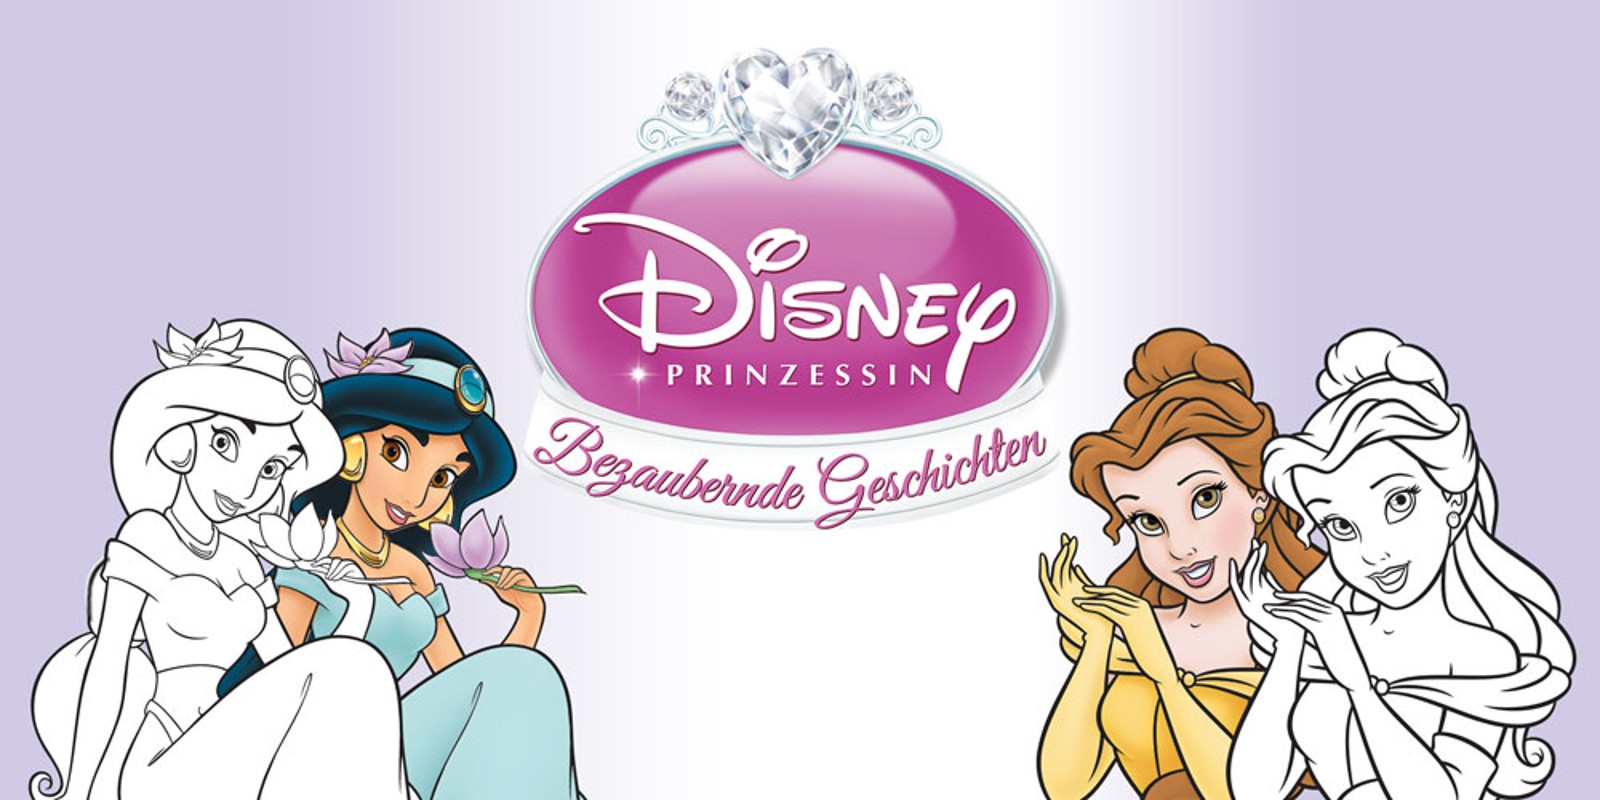 Disney Prinzessin: Bezaubernde Geschichten